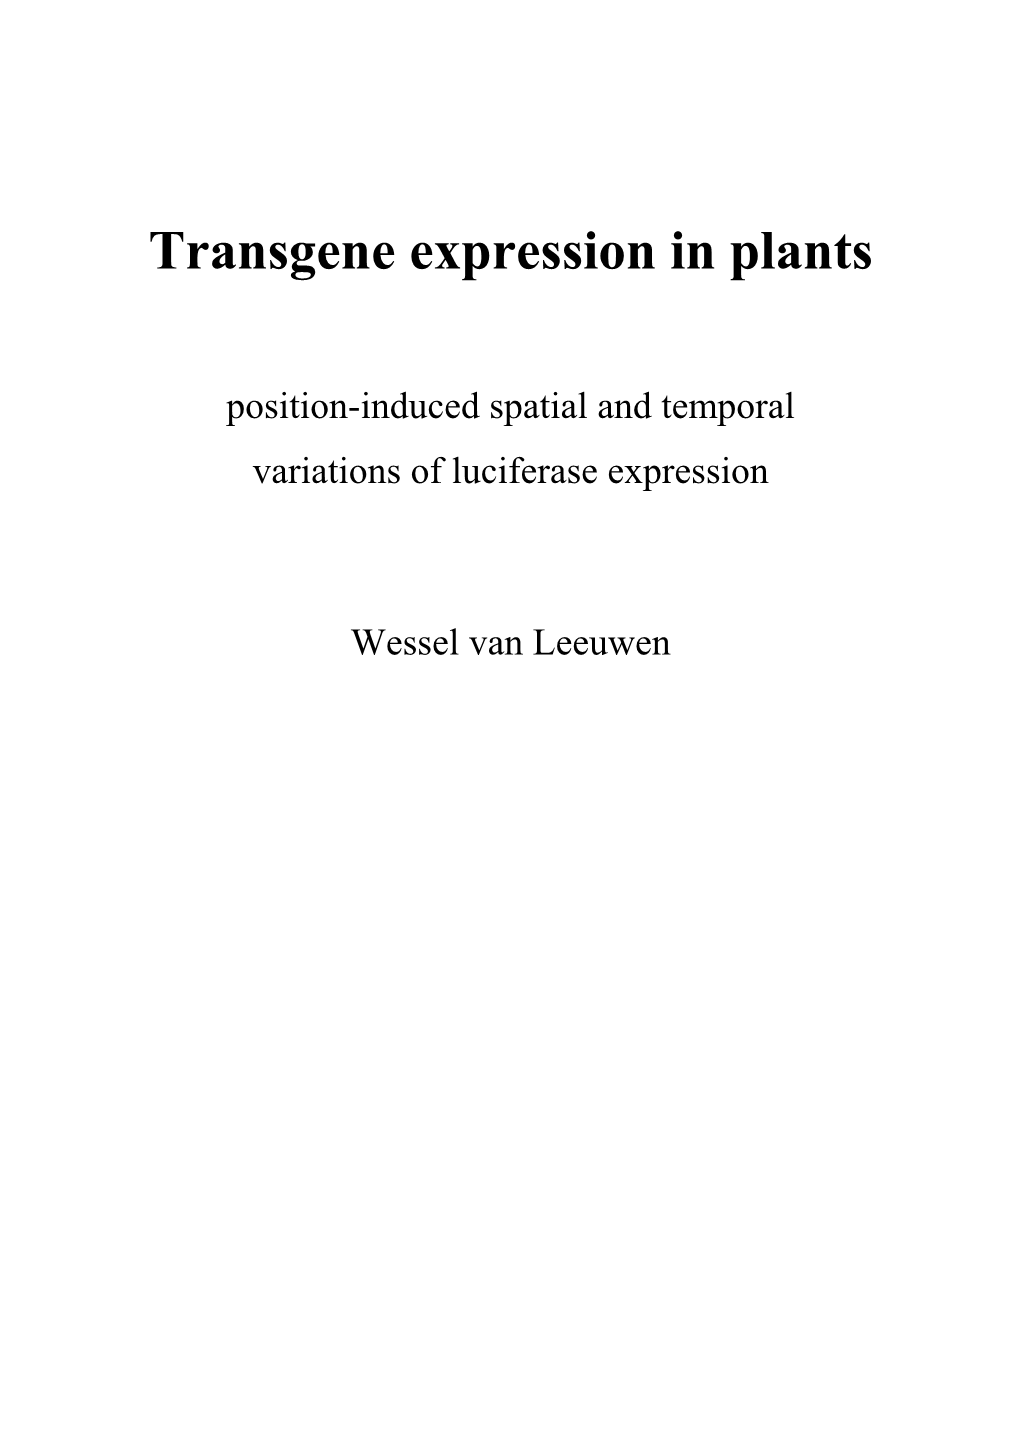 Transgene Expression in Plants